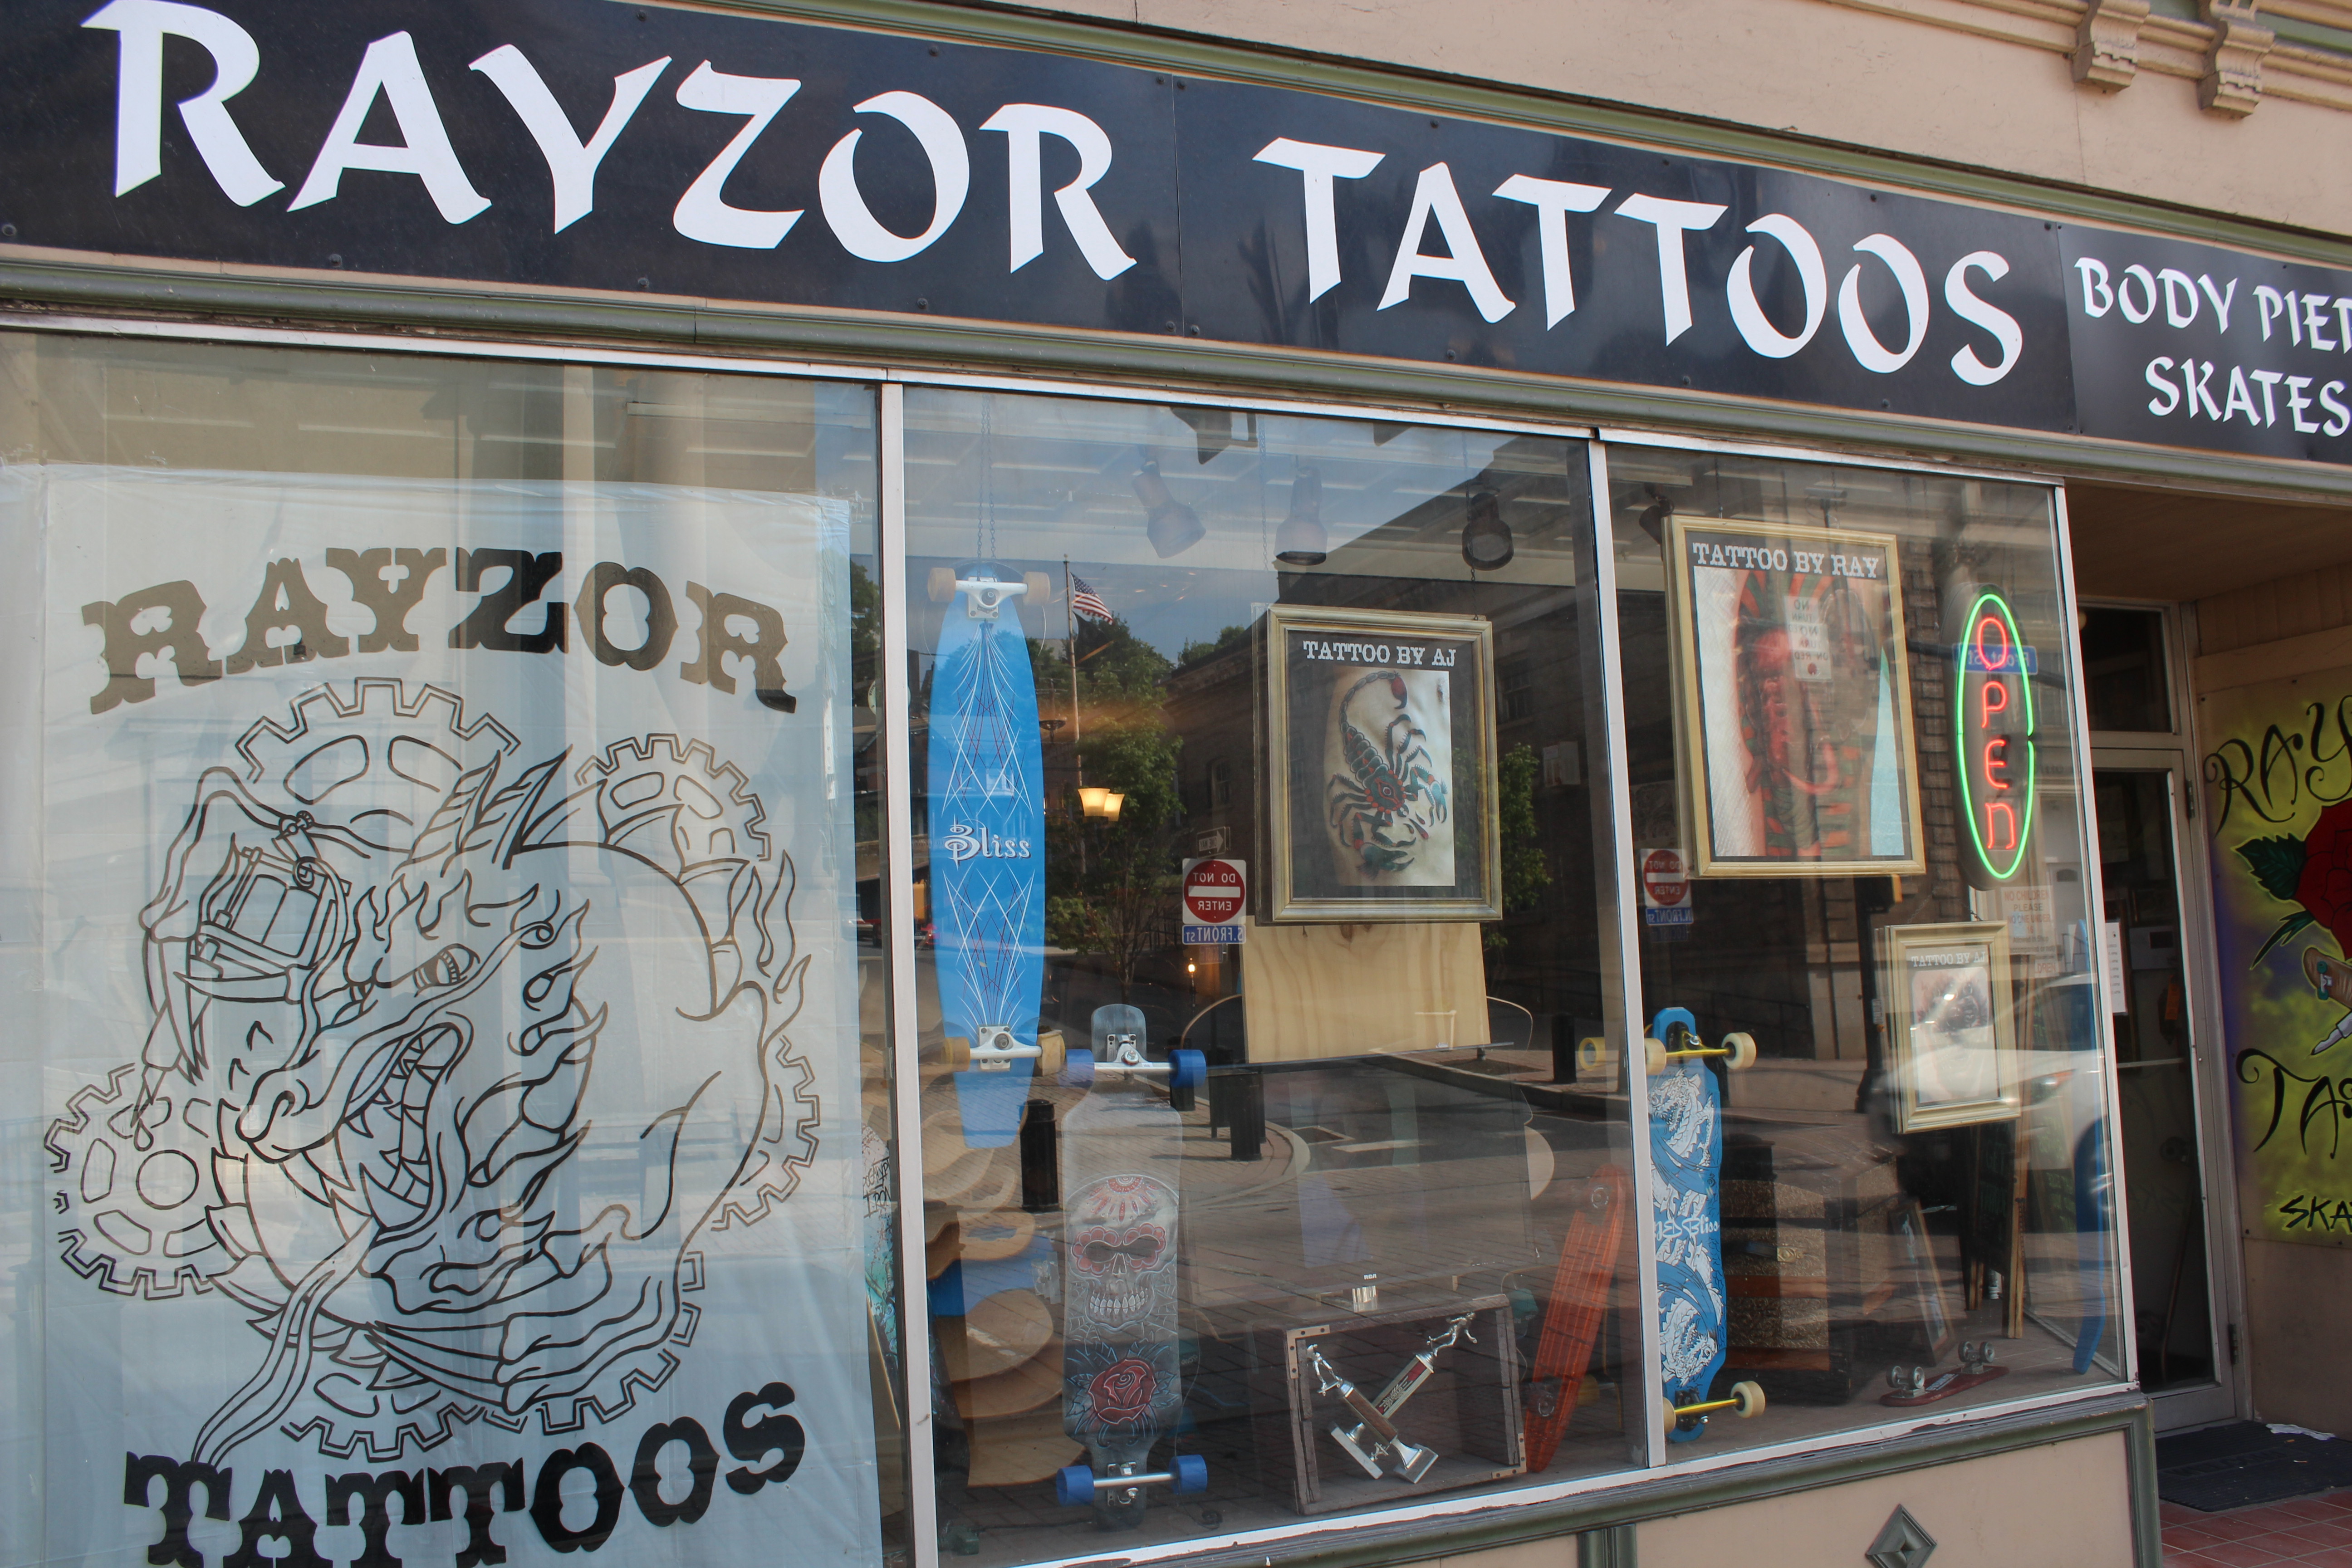 Tattoos Piercings Rayzor Tattoos Harrisburg Central Parayzor Tattoos Tattoo Skate Shop Harrisburg Hershey Capital Region